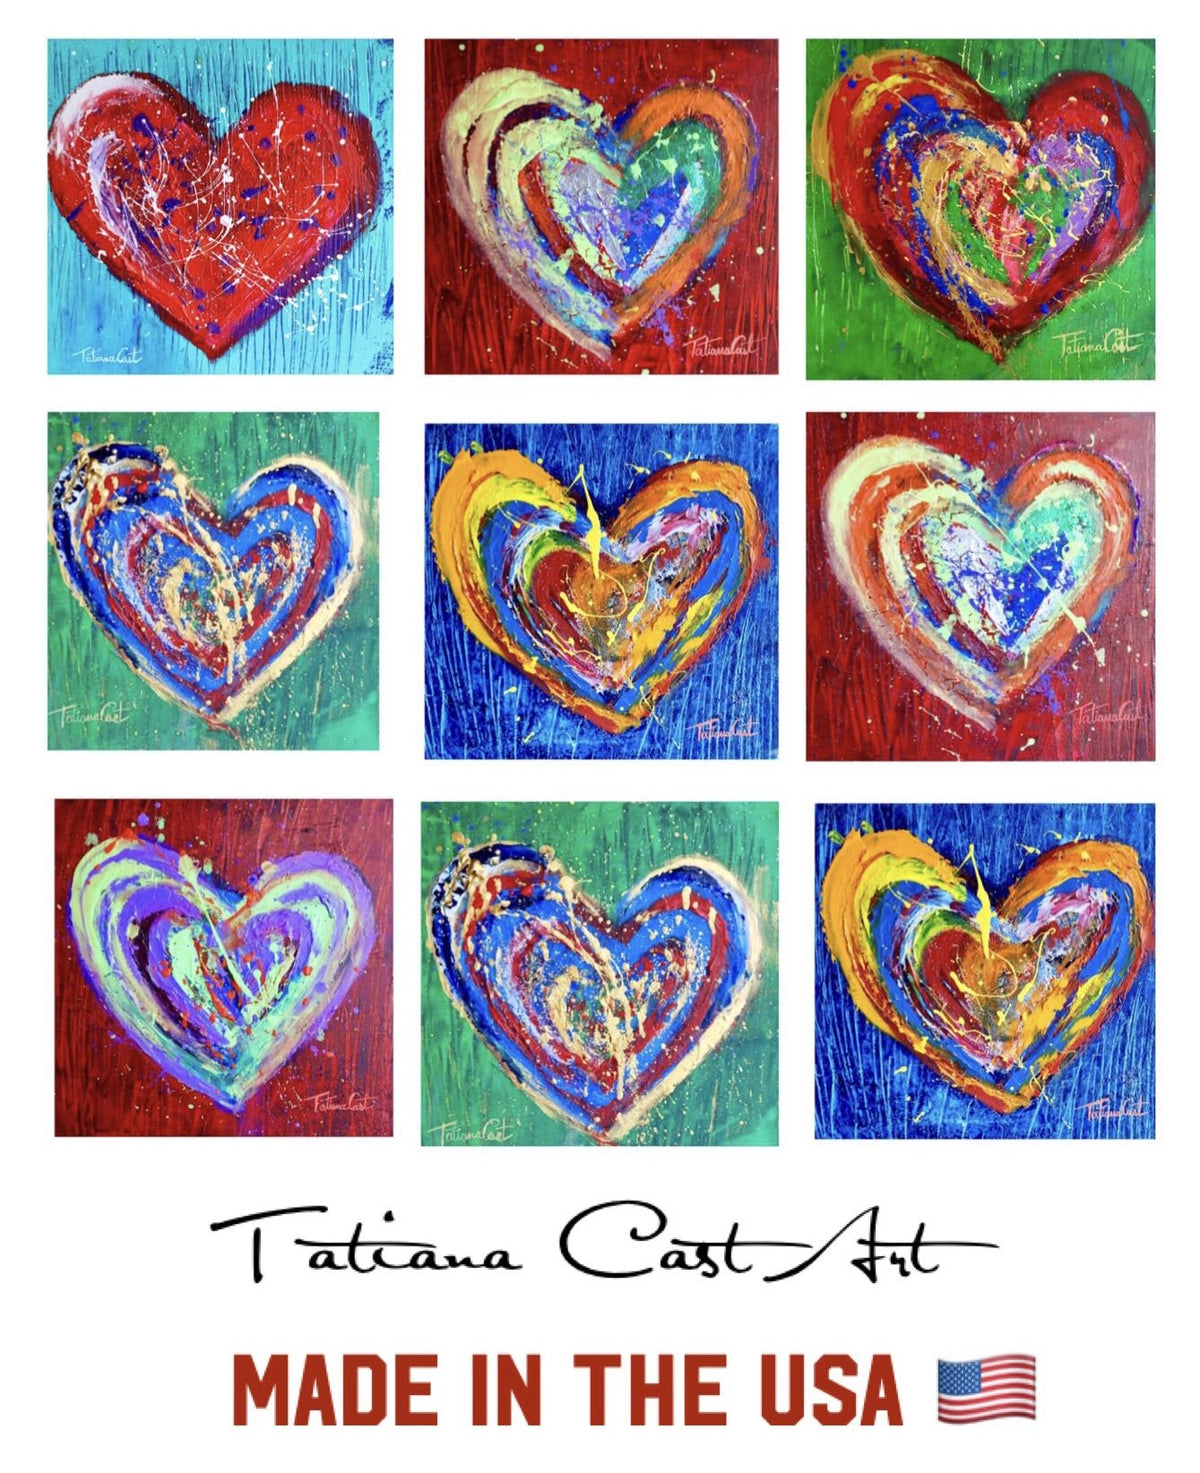 Colorful Heart 4 -Original - TatianaCast